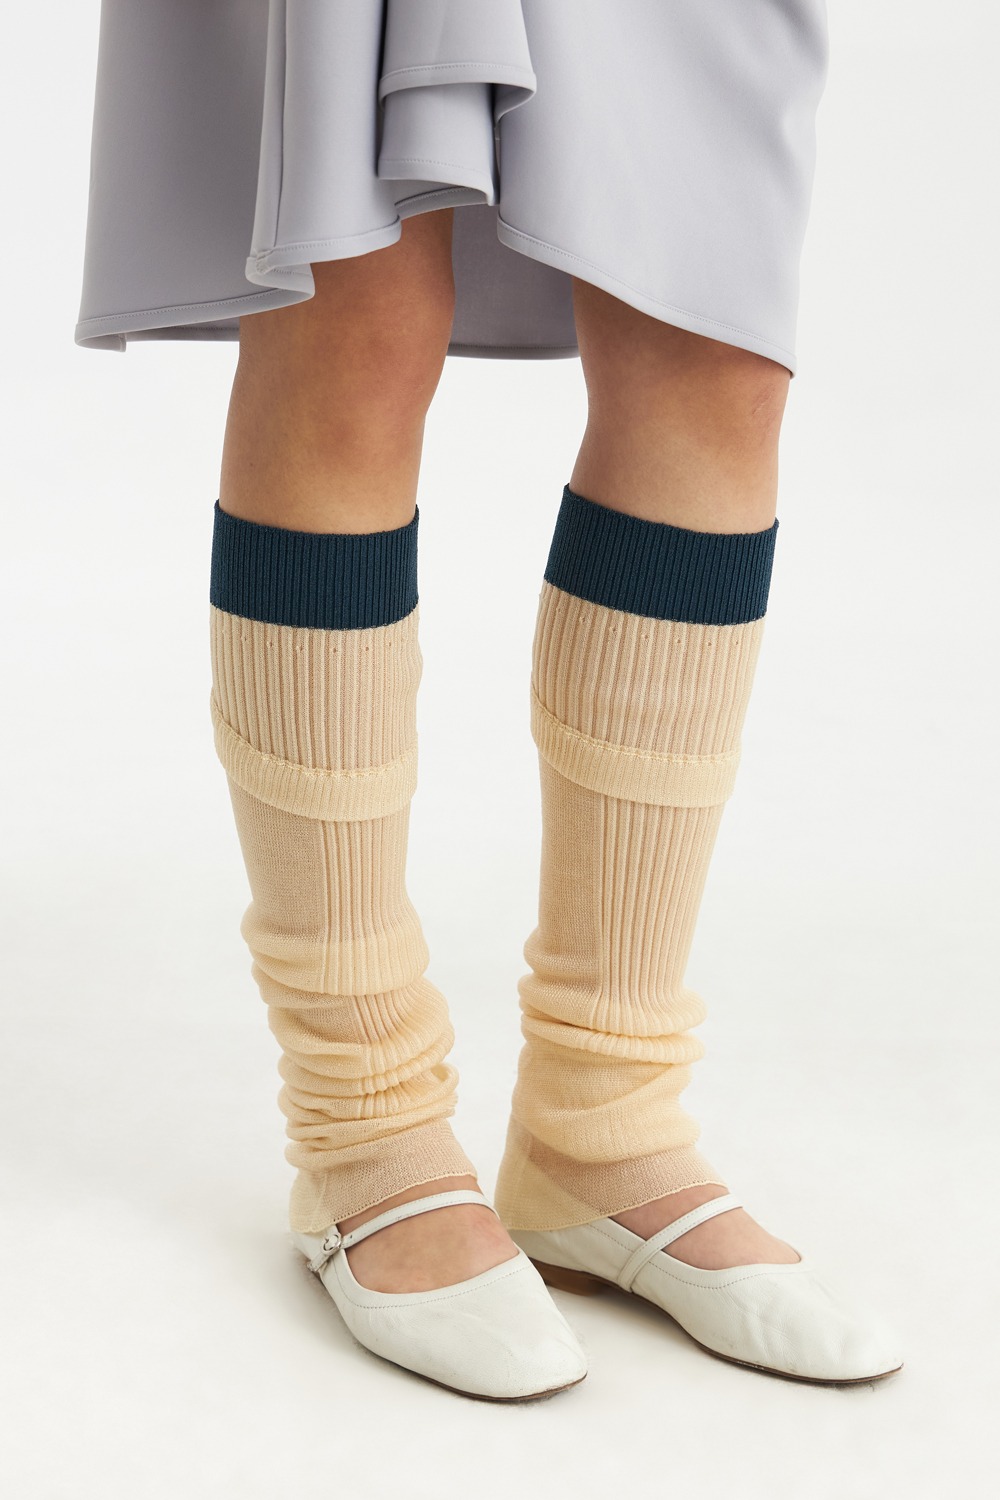 Knee Brace Socks-Gold